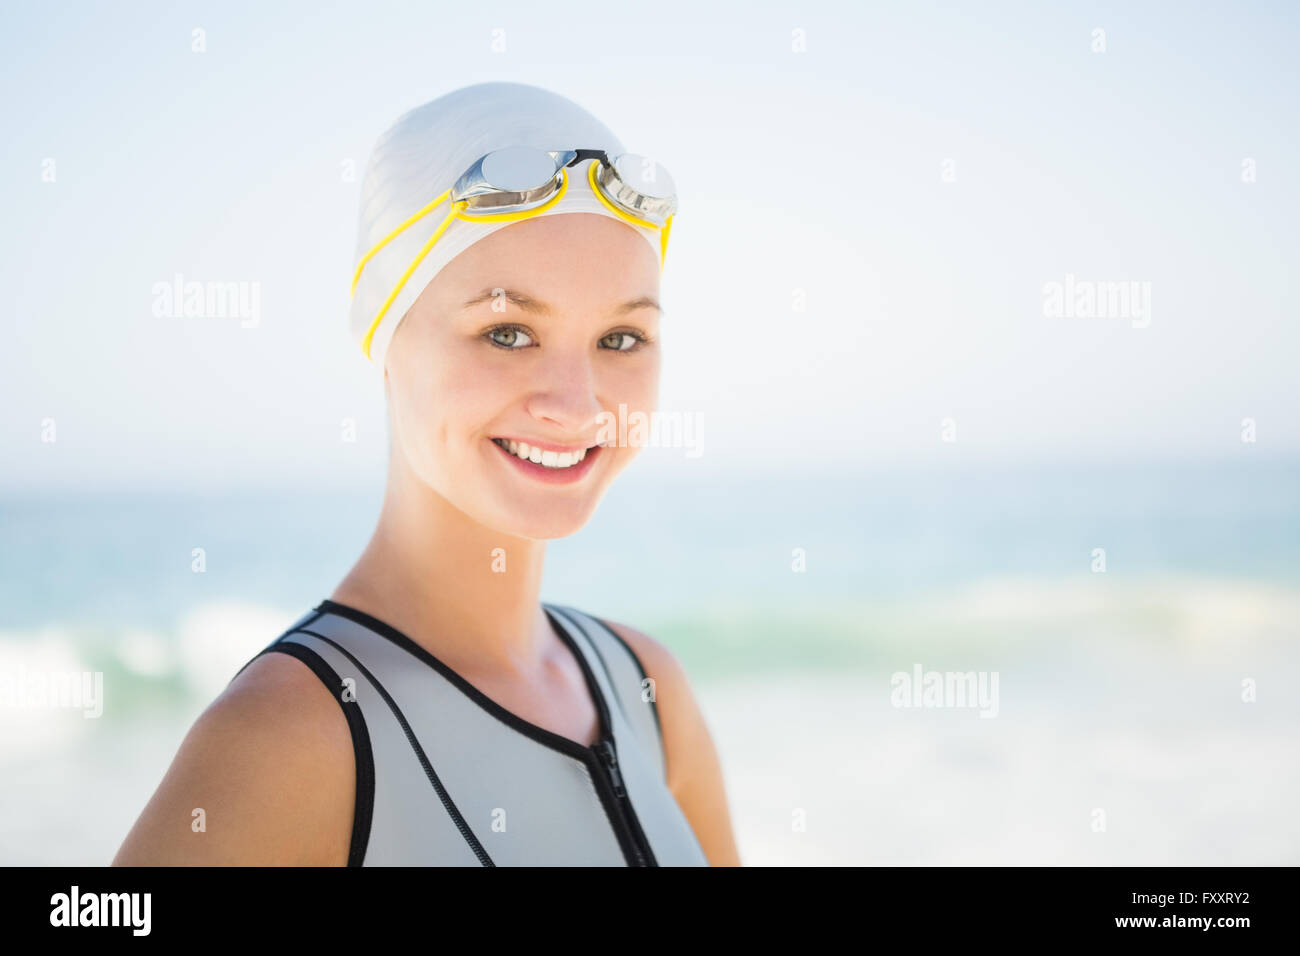 Portrait of smiling swimmer Stock Photo - Alamy